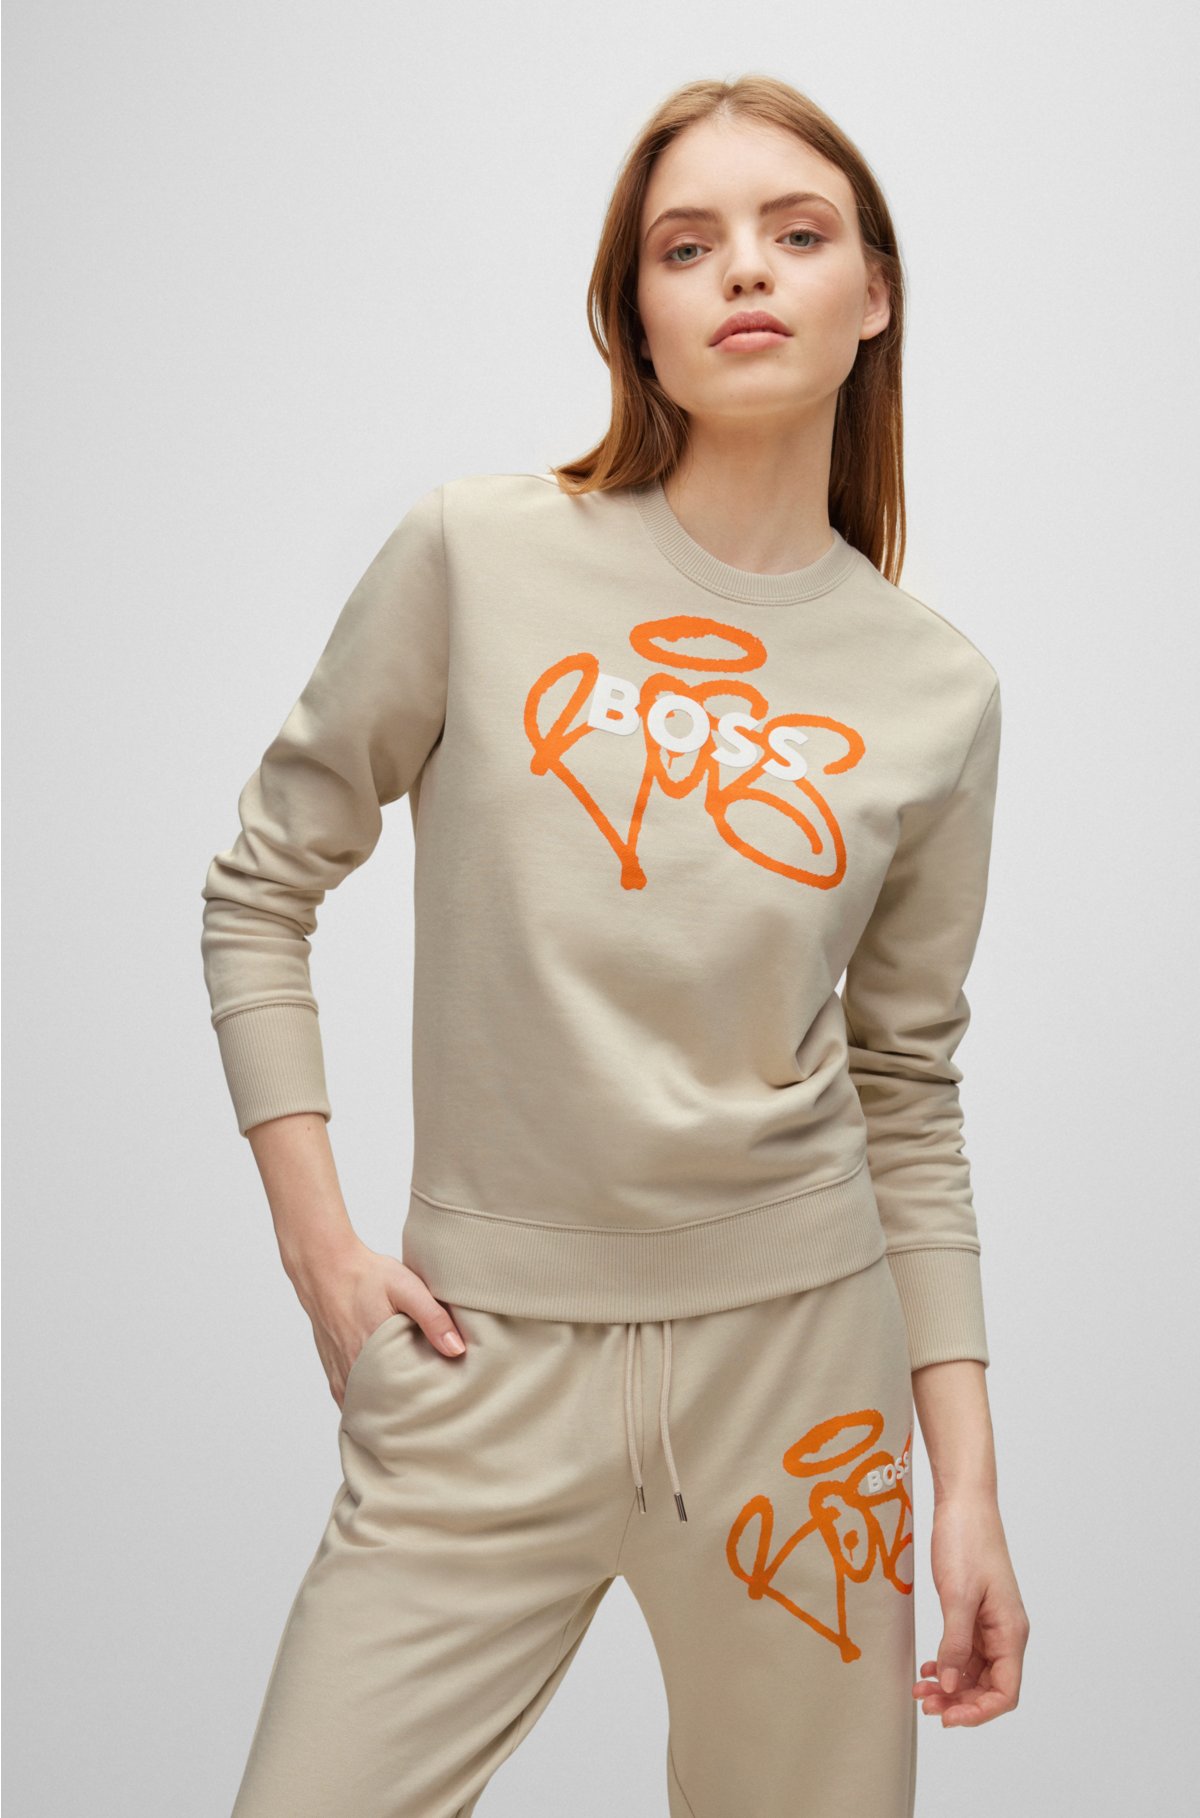 Fashion Beige T-Shirts & Tops for Women by HUGO BOSS